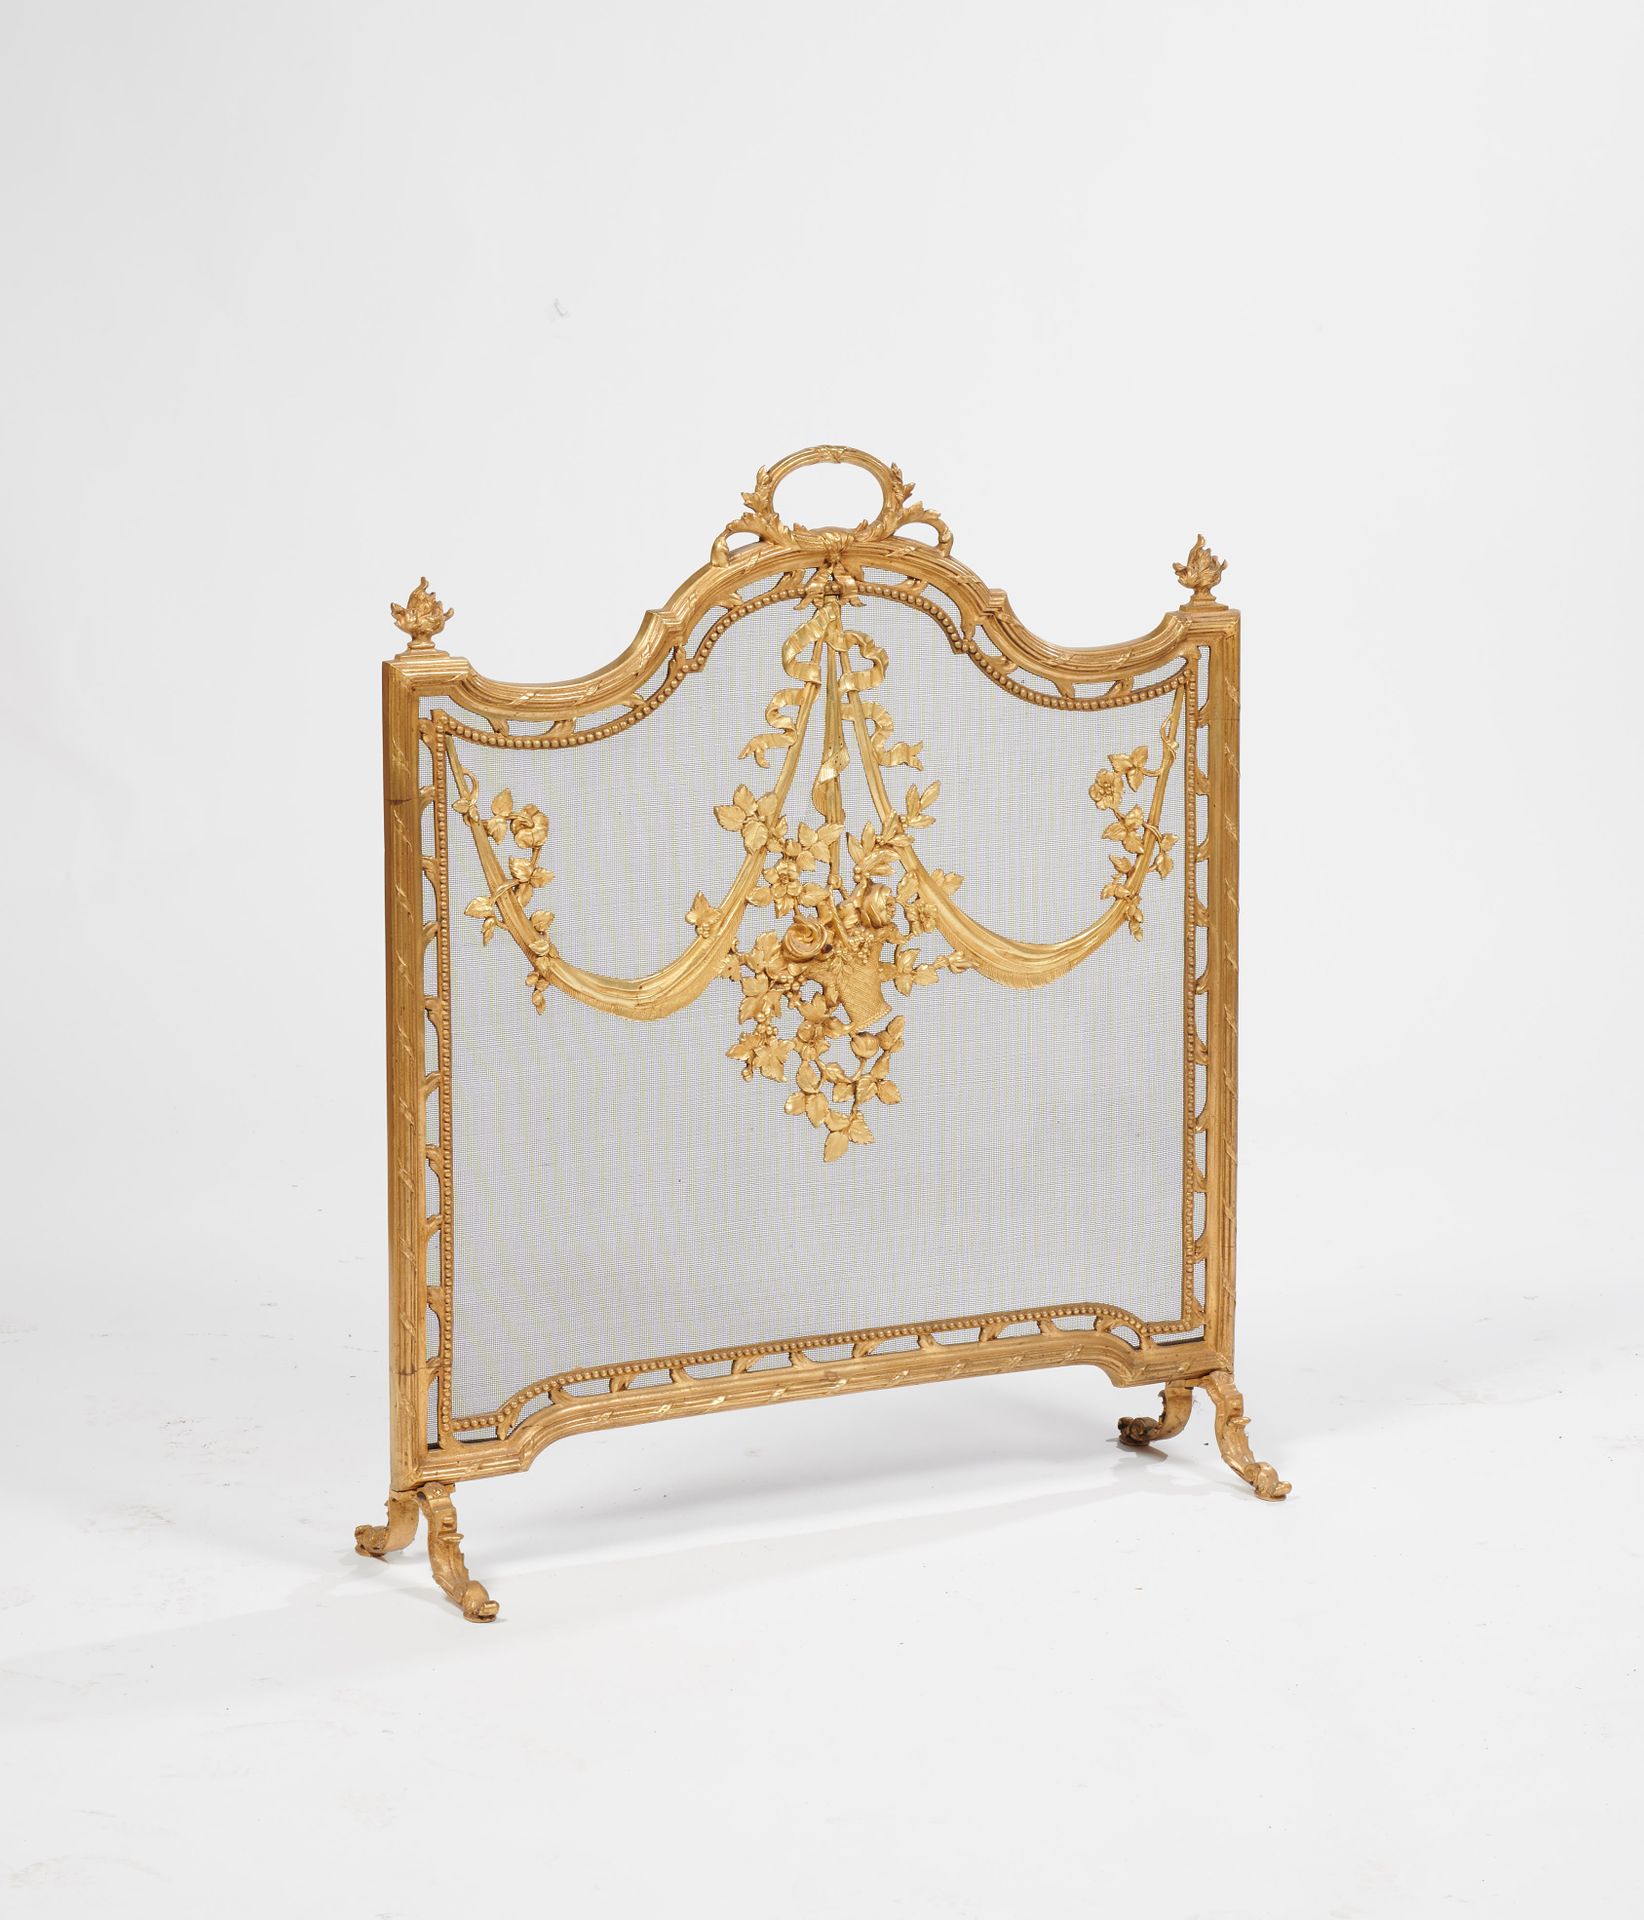 Null 鎏金青铜火盆，装饰有花篮、窗帘、丝带蝴蝶结和火盆 
拿破仑三世时期
79 x 69 x 21厘米